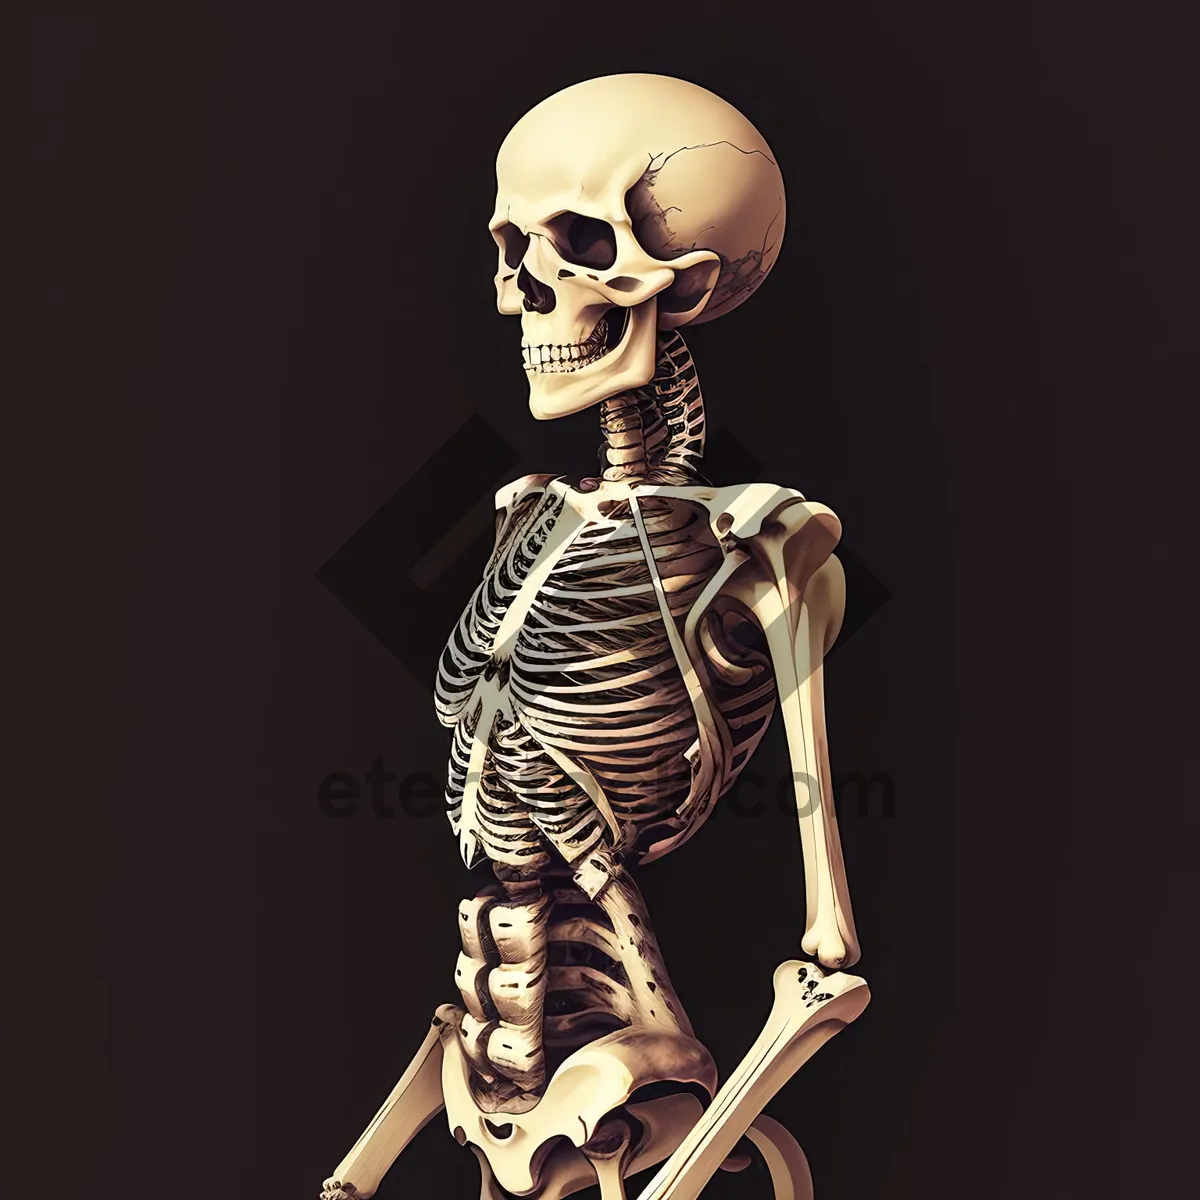 Picture of Eerie Skeleton Bodybuilder Strikes Terrifying Pose in Cemetery